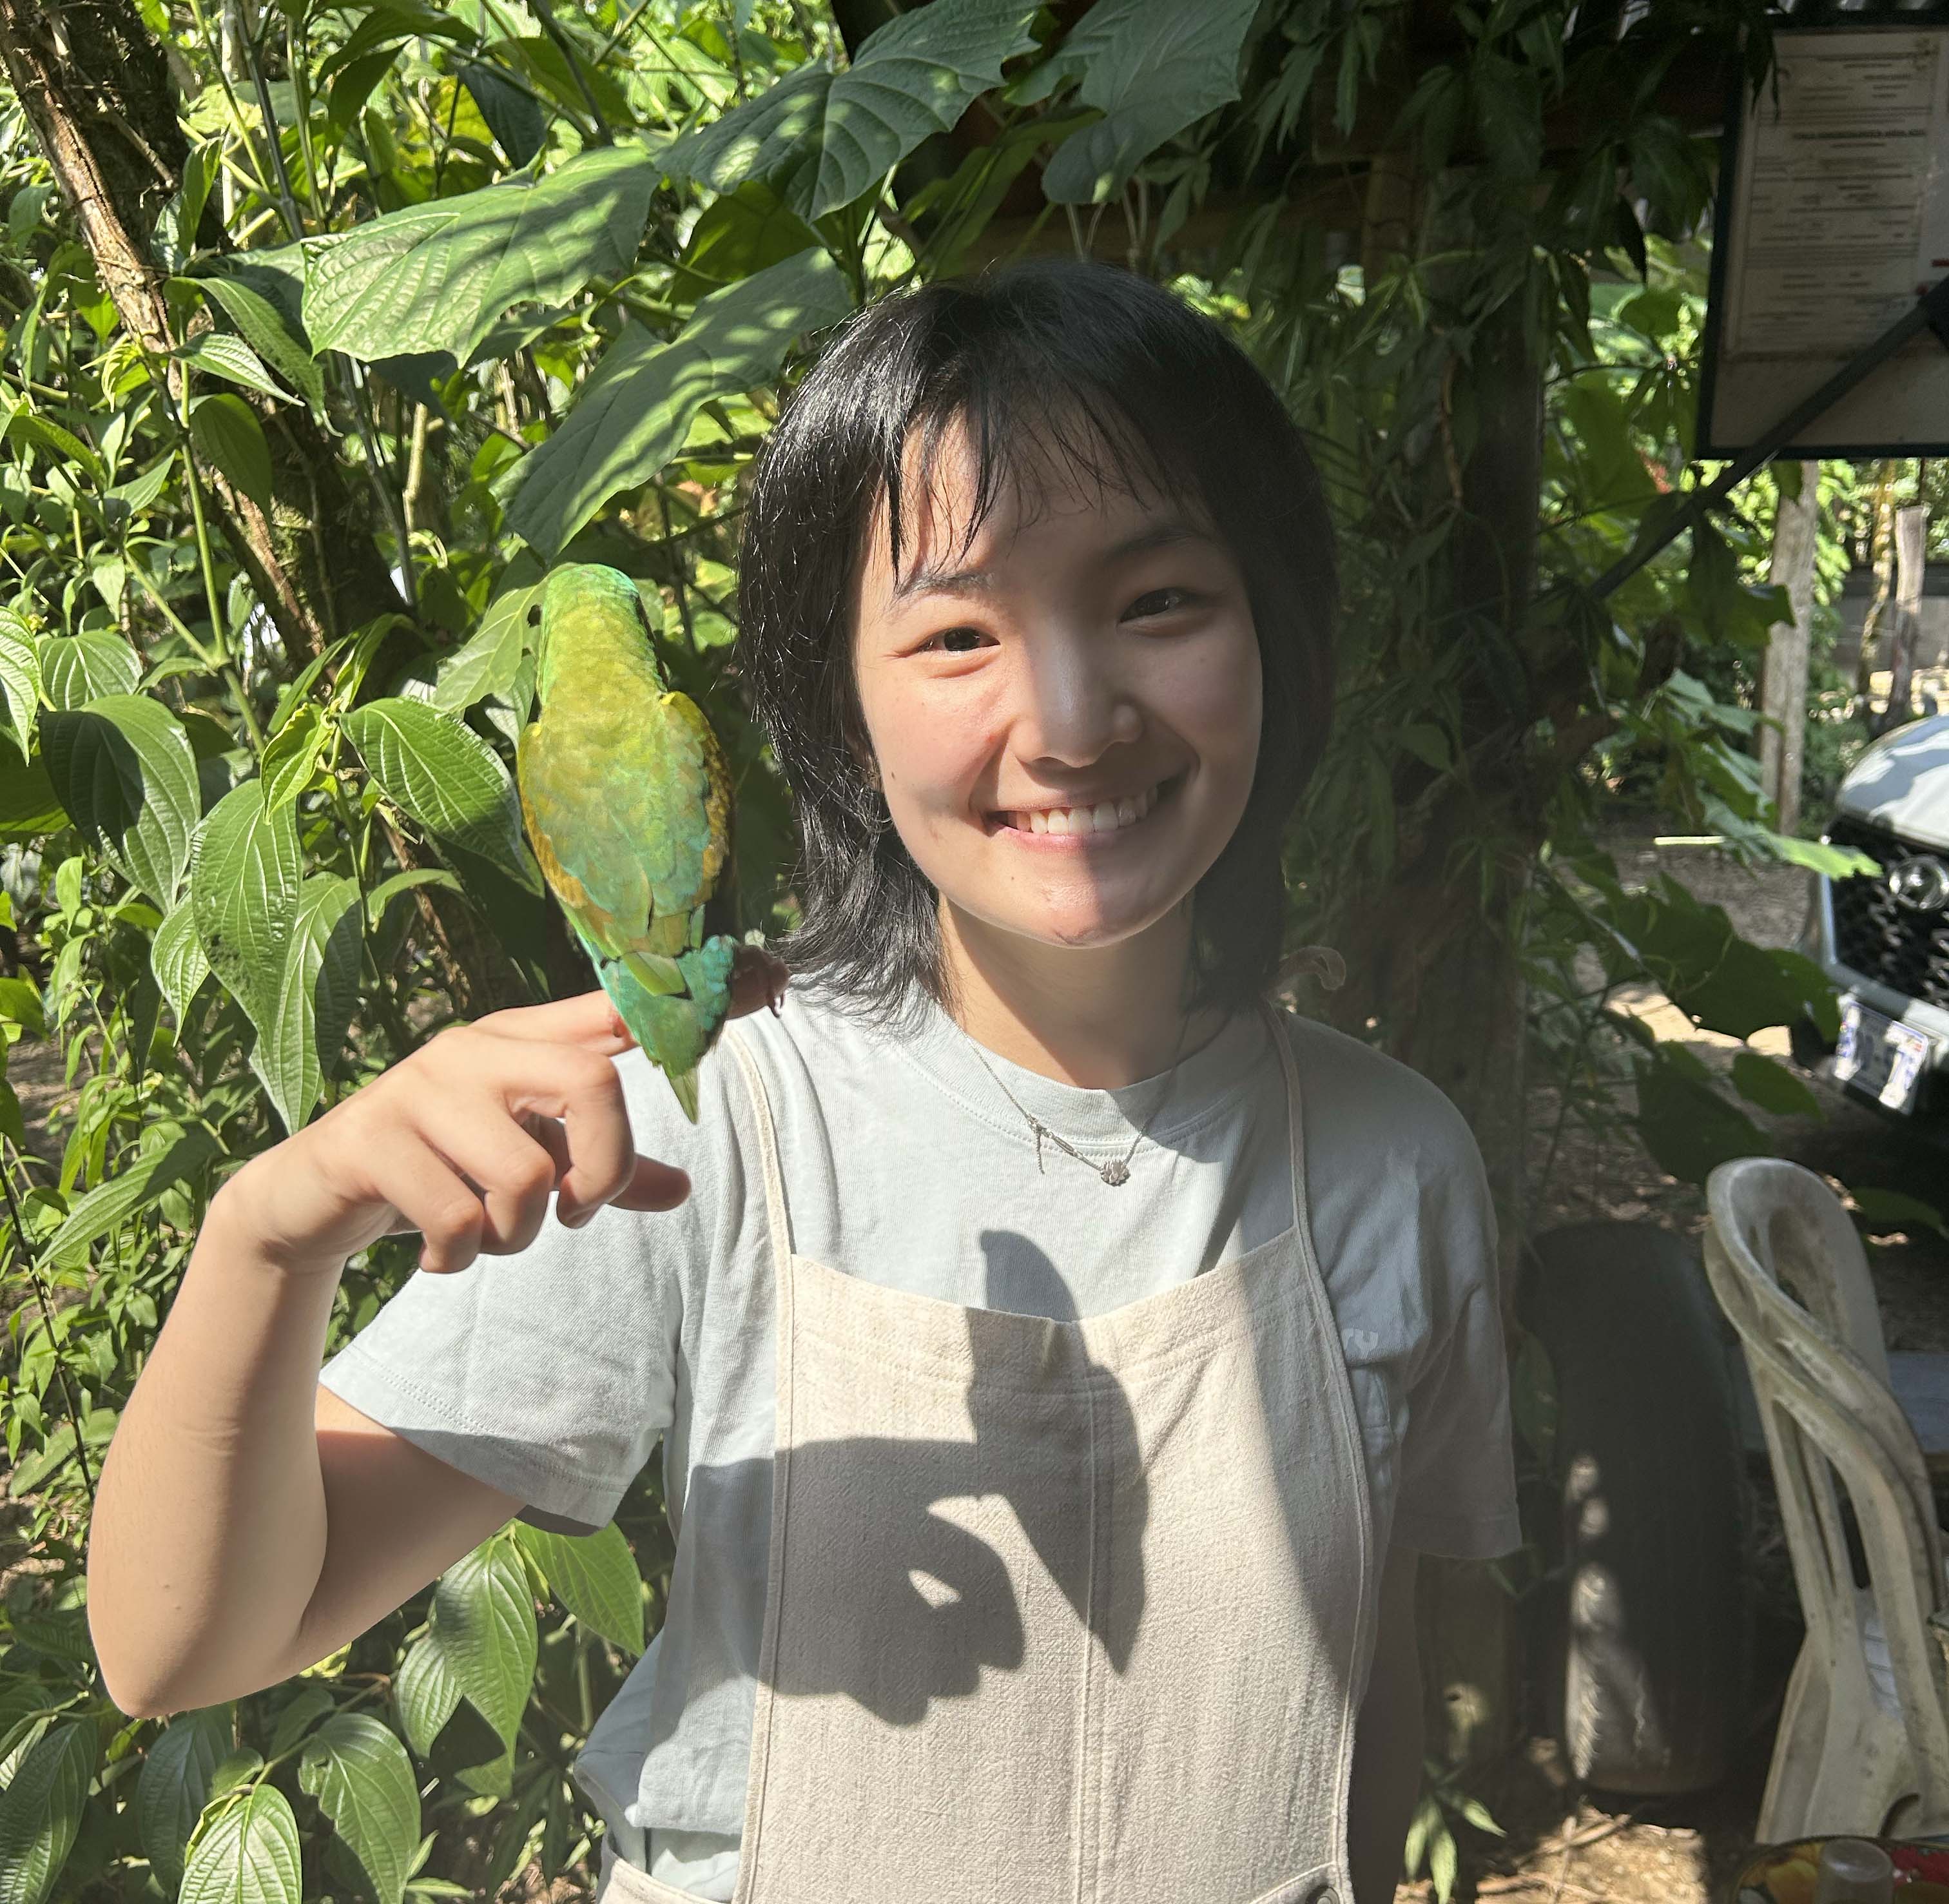 Yang Du holding up a bird that's on her finger